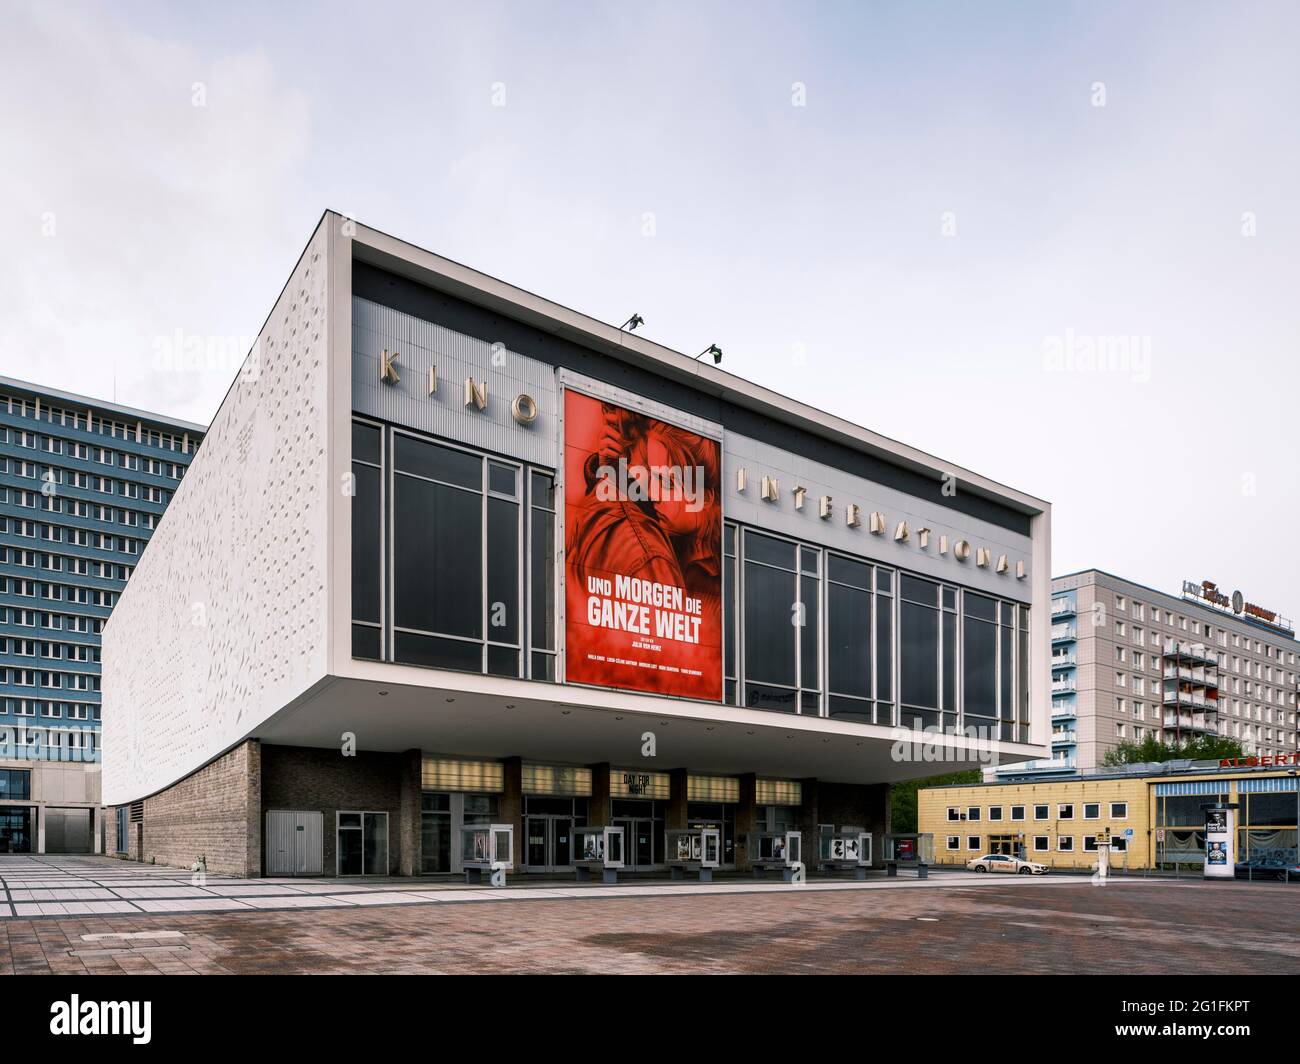 Kino International al Karl-Marx-Allee, stile Est-moderno, architetti Josef Kaiser e Heinz Aust, Berlin-Mitte, Berlino, Germania Foto Stock